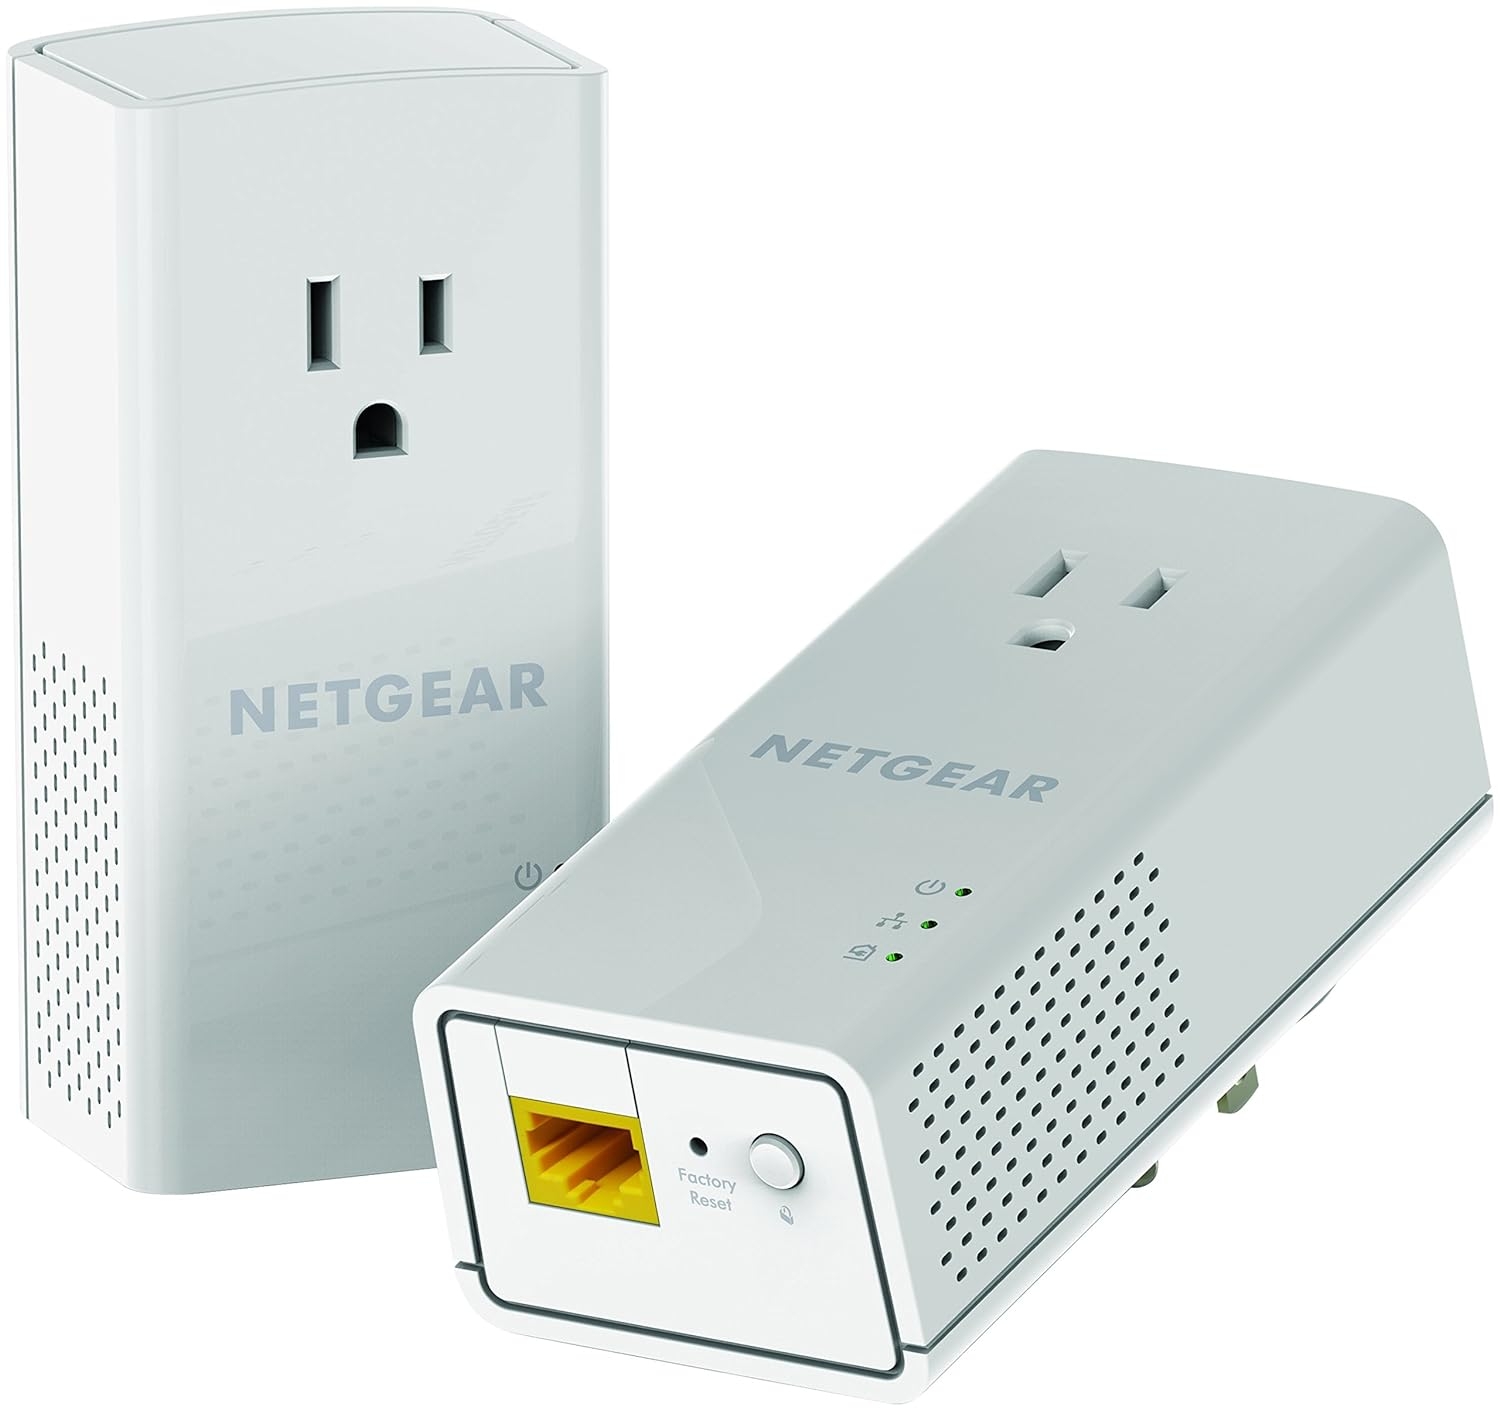 NETGEAR PowerLINE 1200 Mbps, 1 Gigabit Port with Pass-Through, Extra Outlet (PLP1200-100PAS)